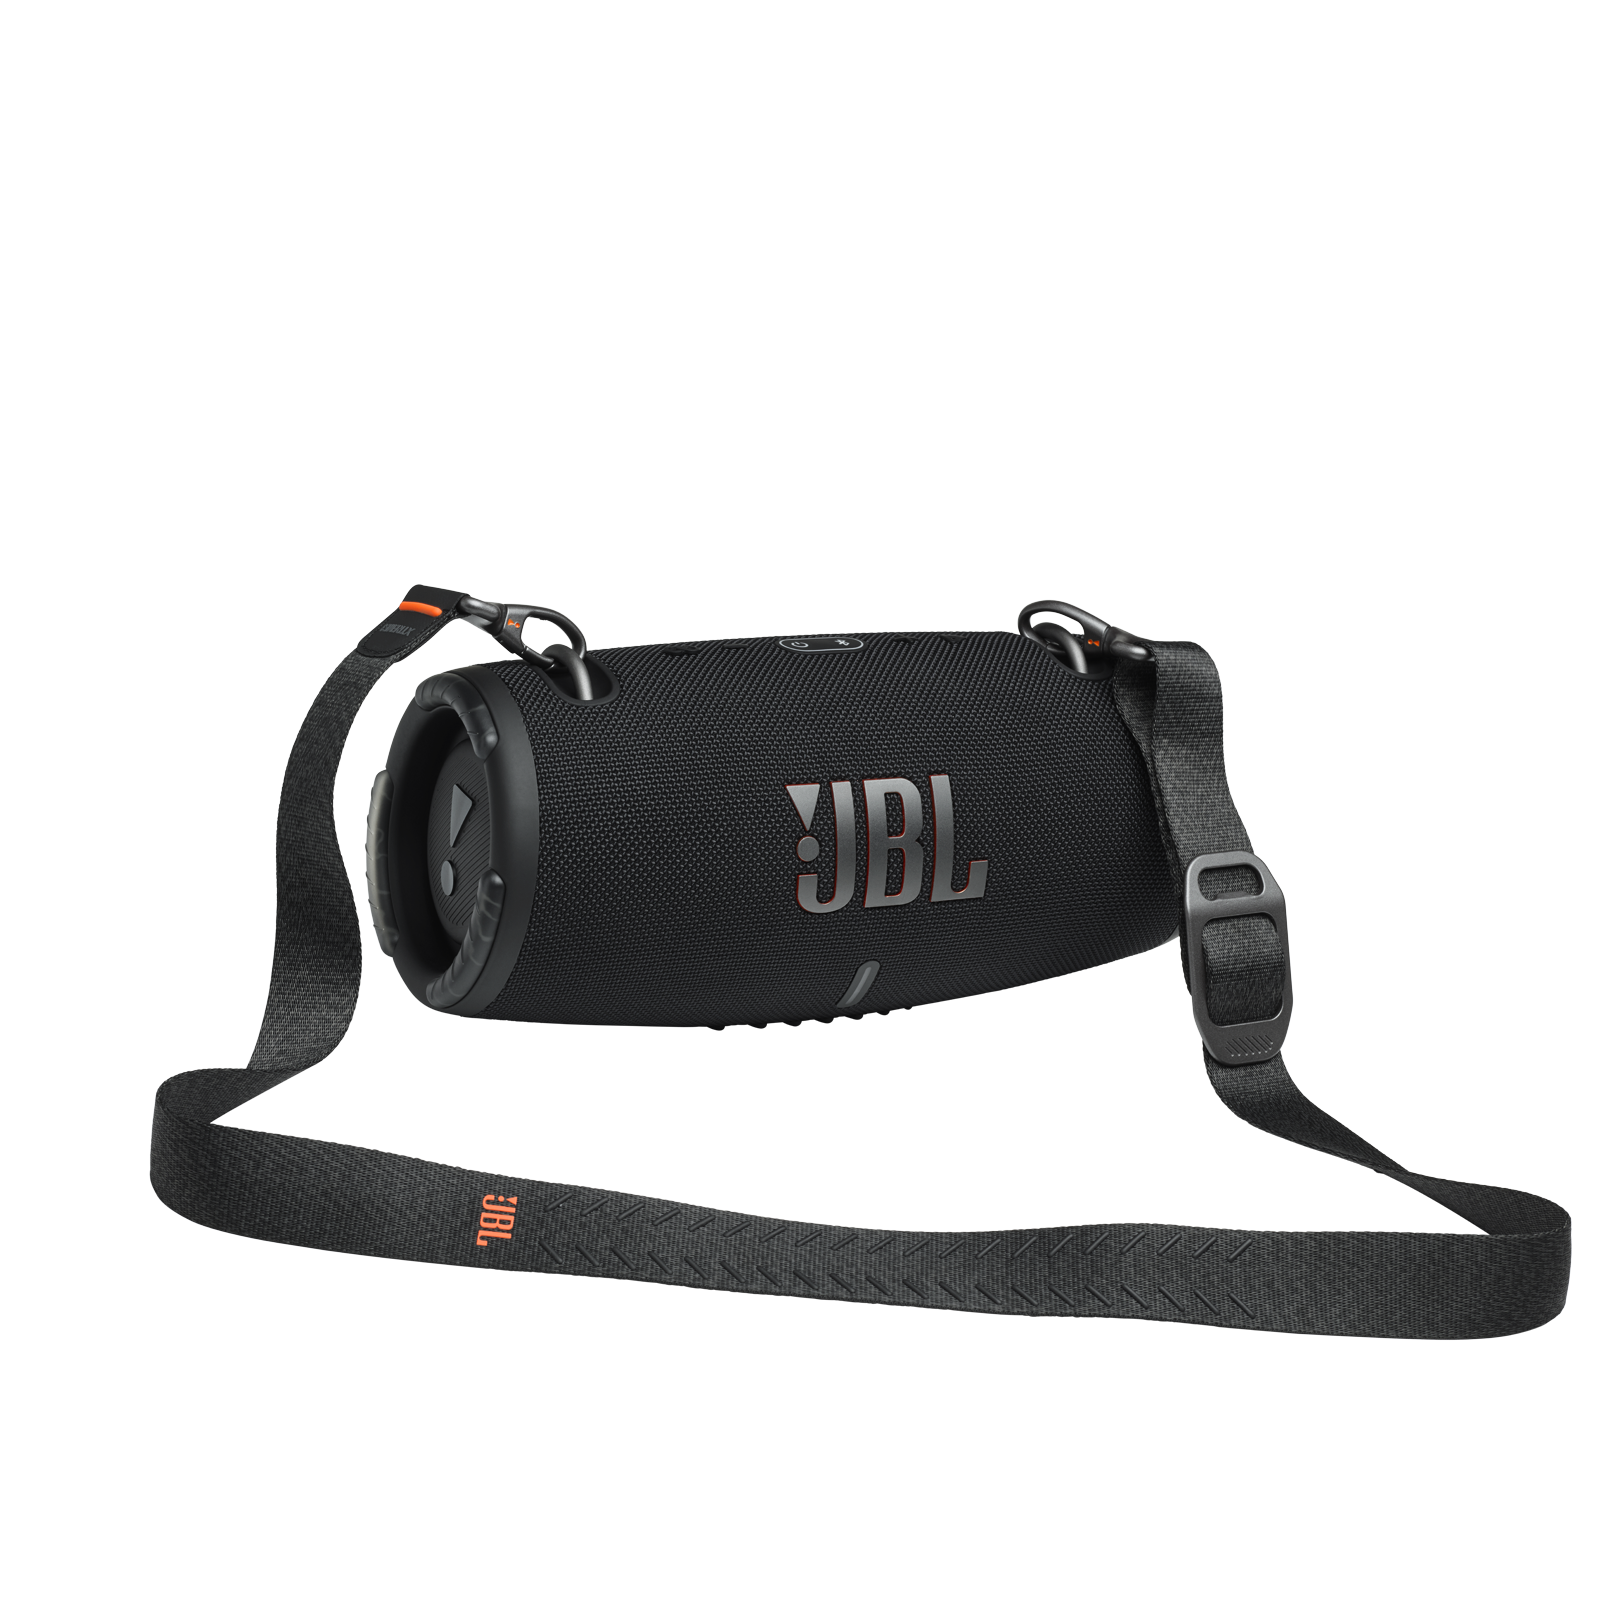 JBL Xtreme 3 - Black - Portable waterproof speaker - Detailshot 1